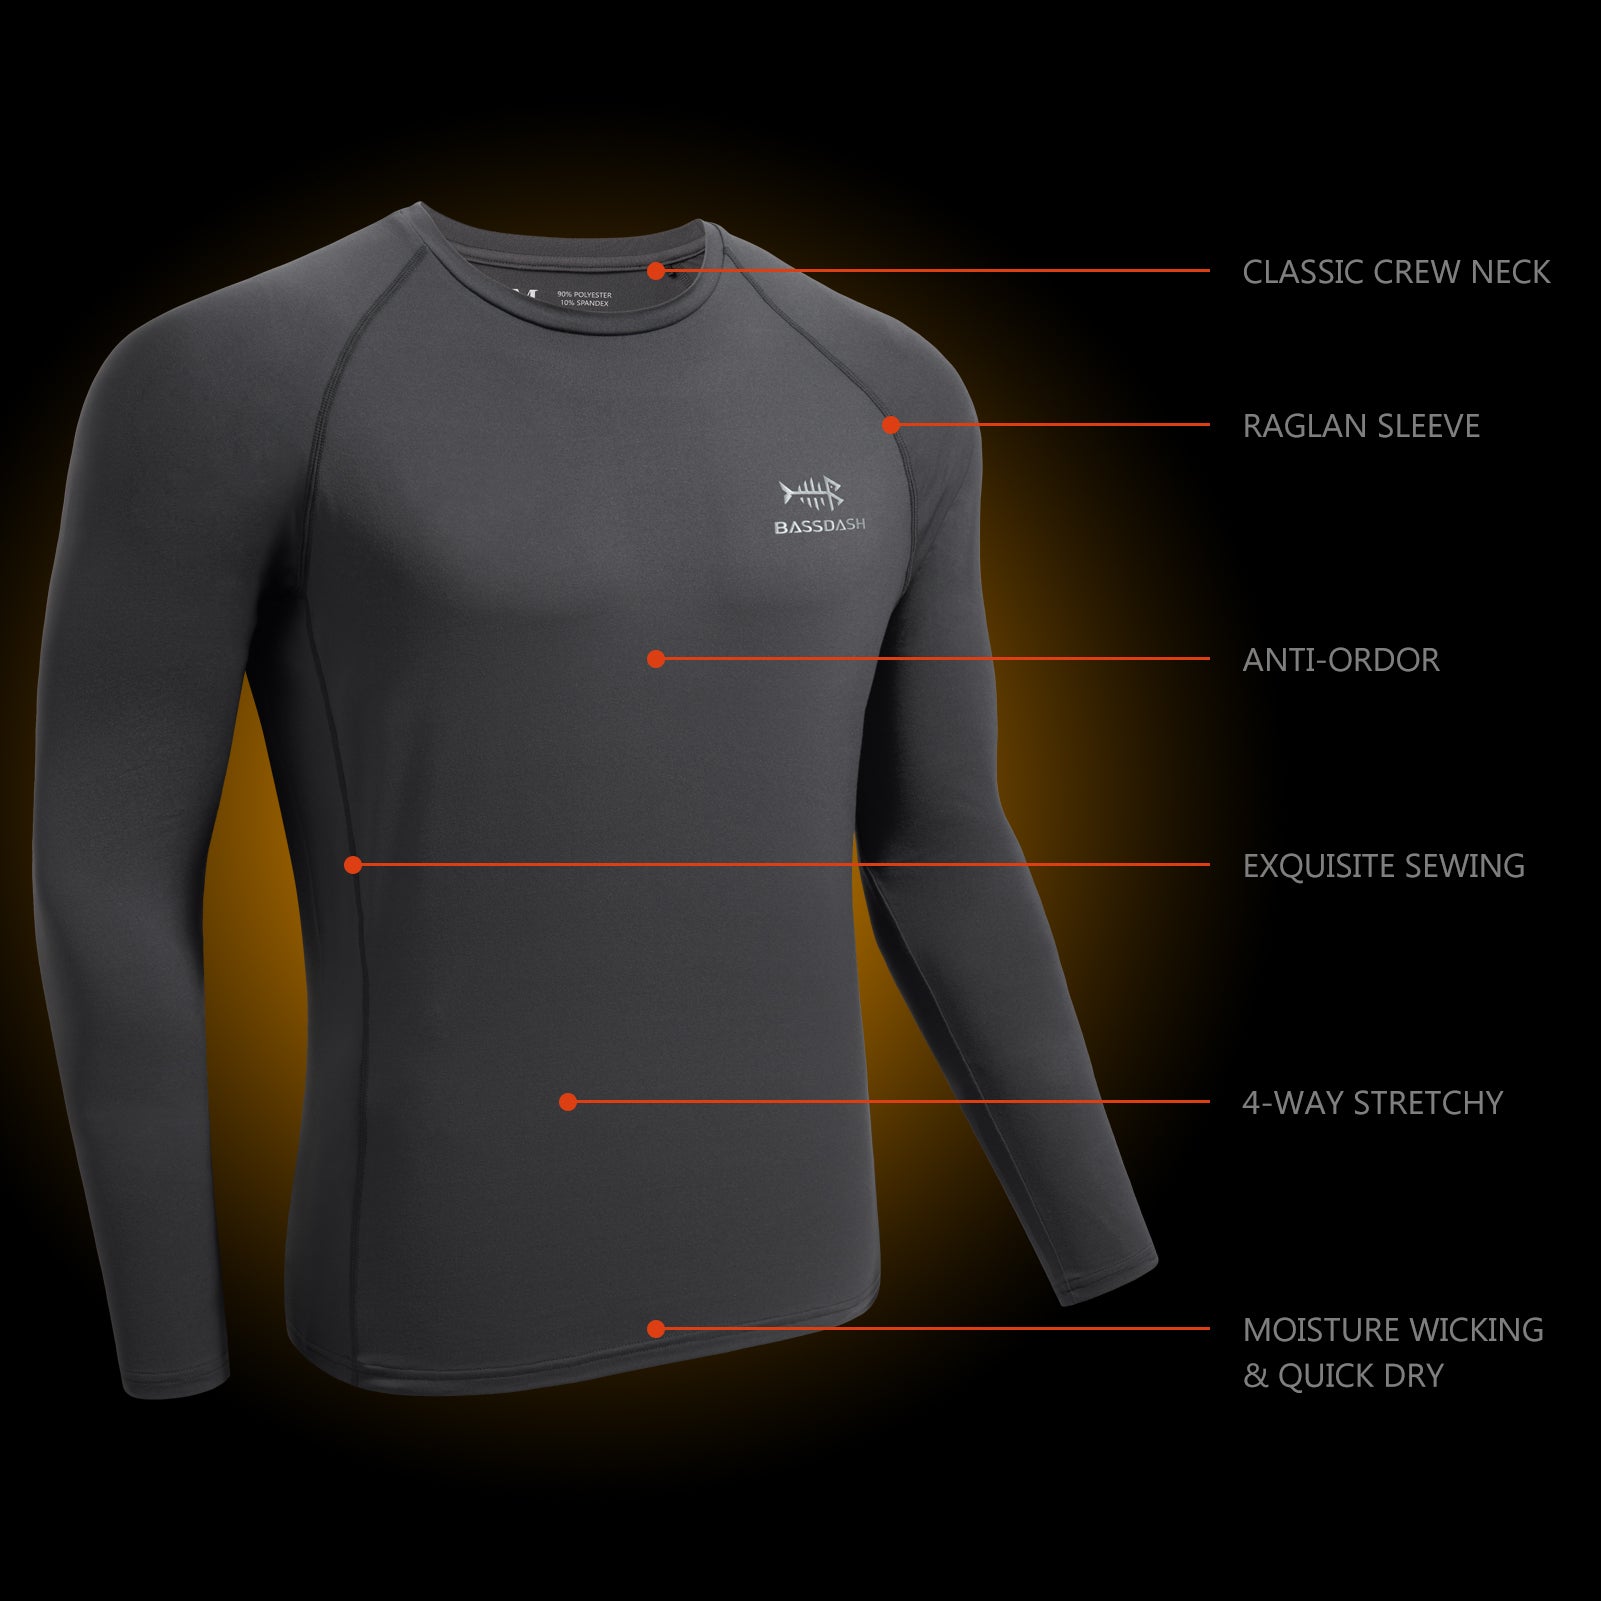 Men's Lightweight Thermal Base Layer Shirt FS19M